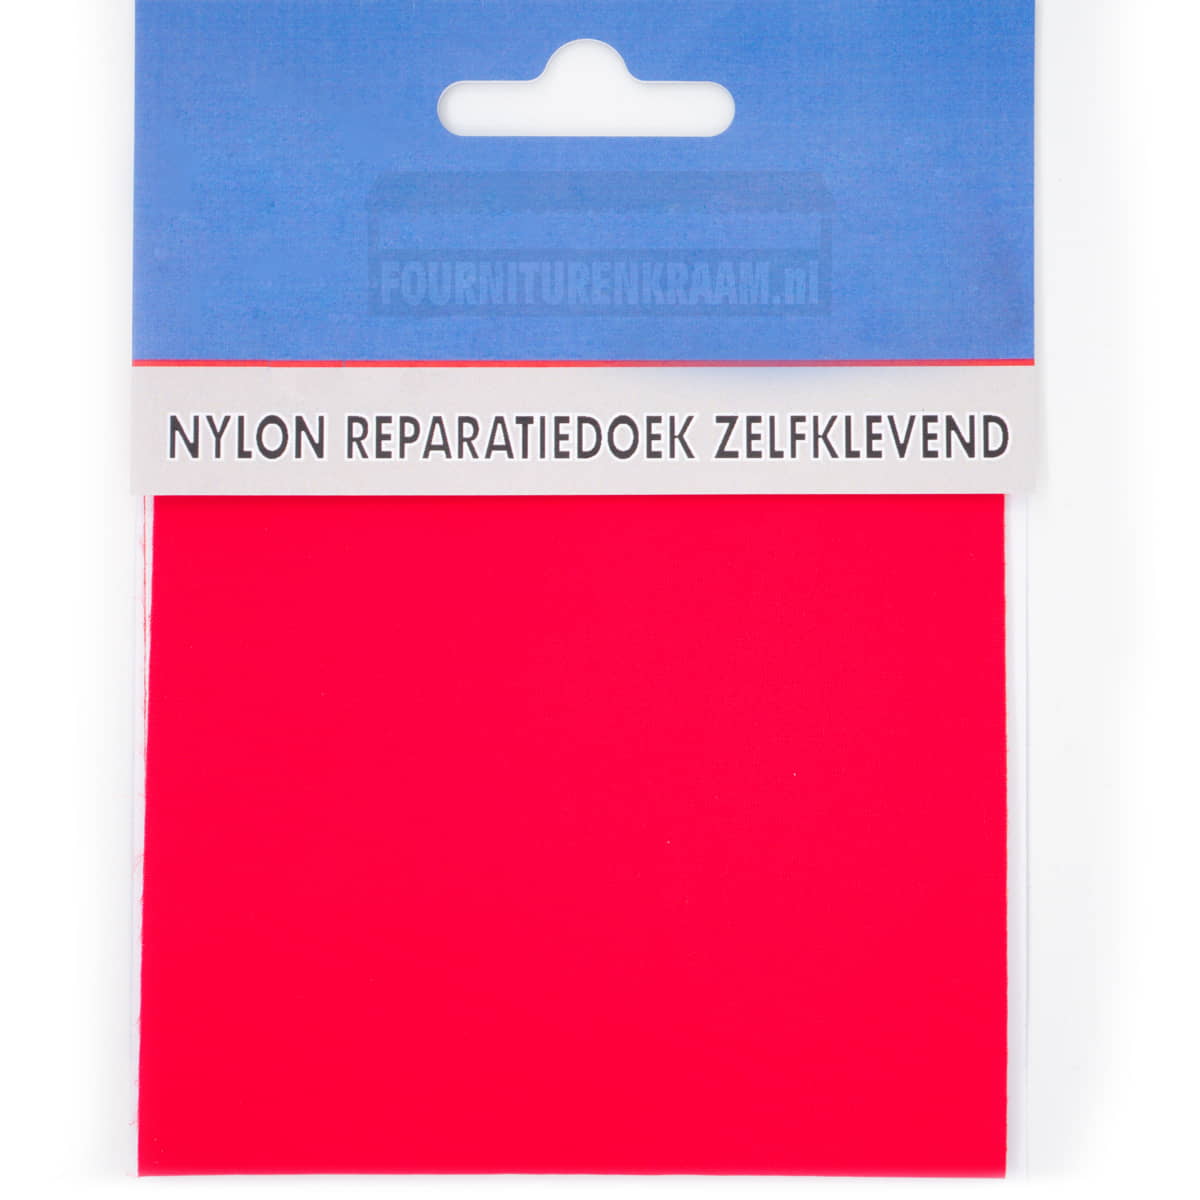 Zelfklevend repartiedoek huismerk | Nylon | 10 x 20 cm | rood NYLON-1114-10